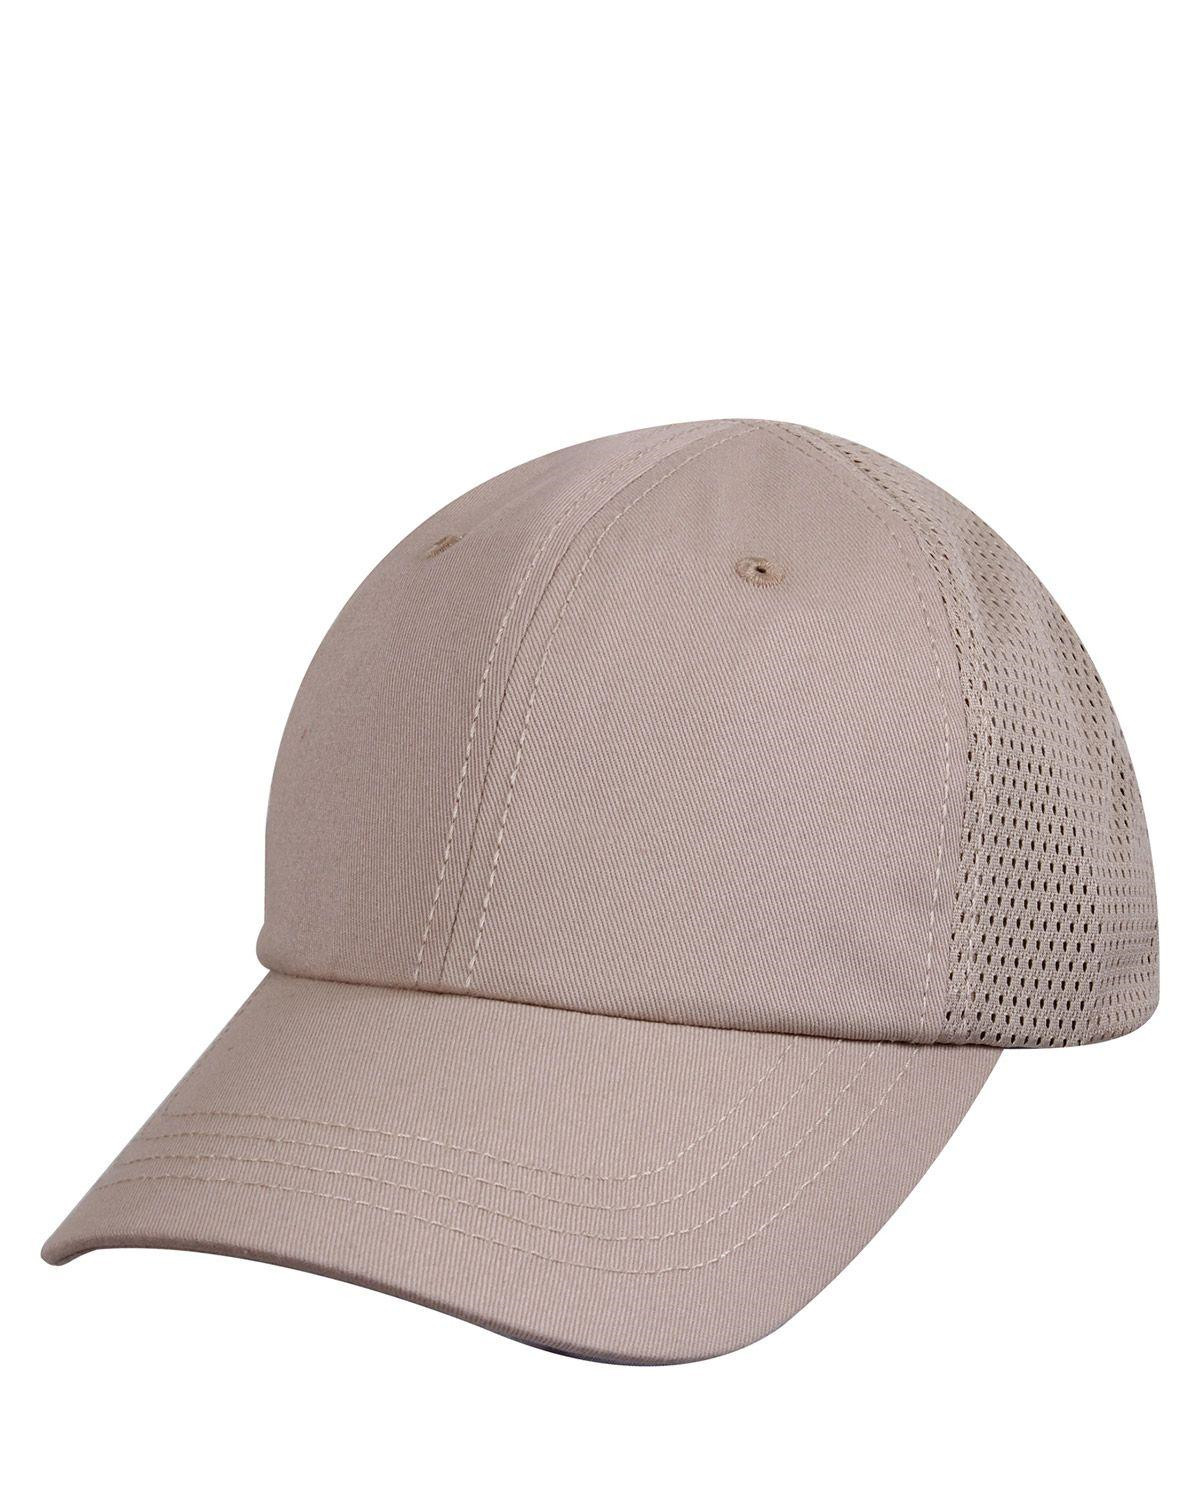 Rothco Mesh Cap (Khaki, One Size)